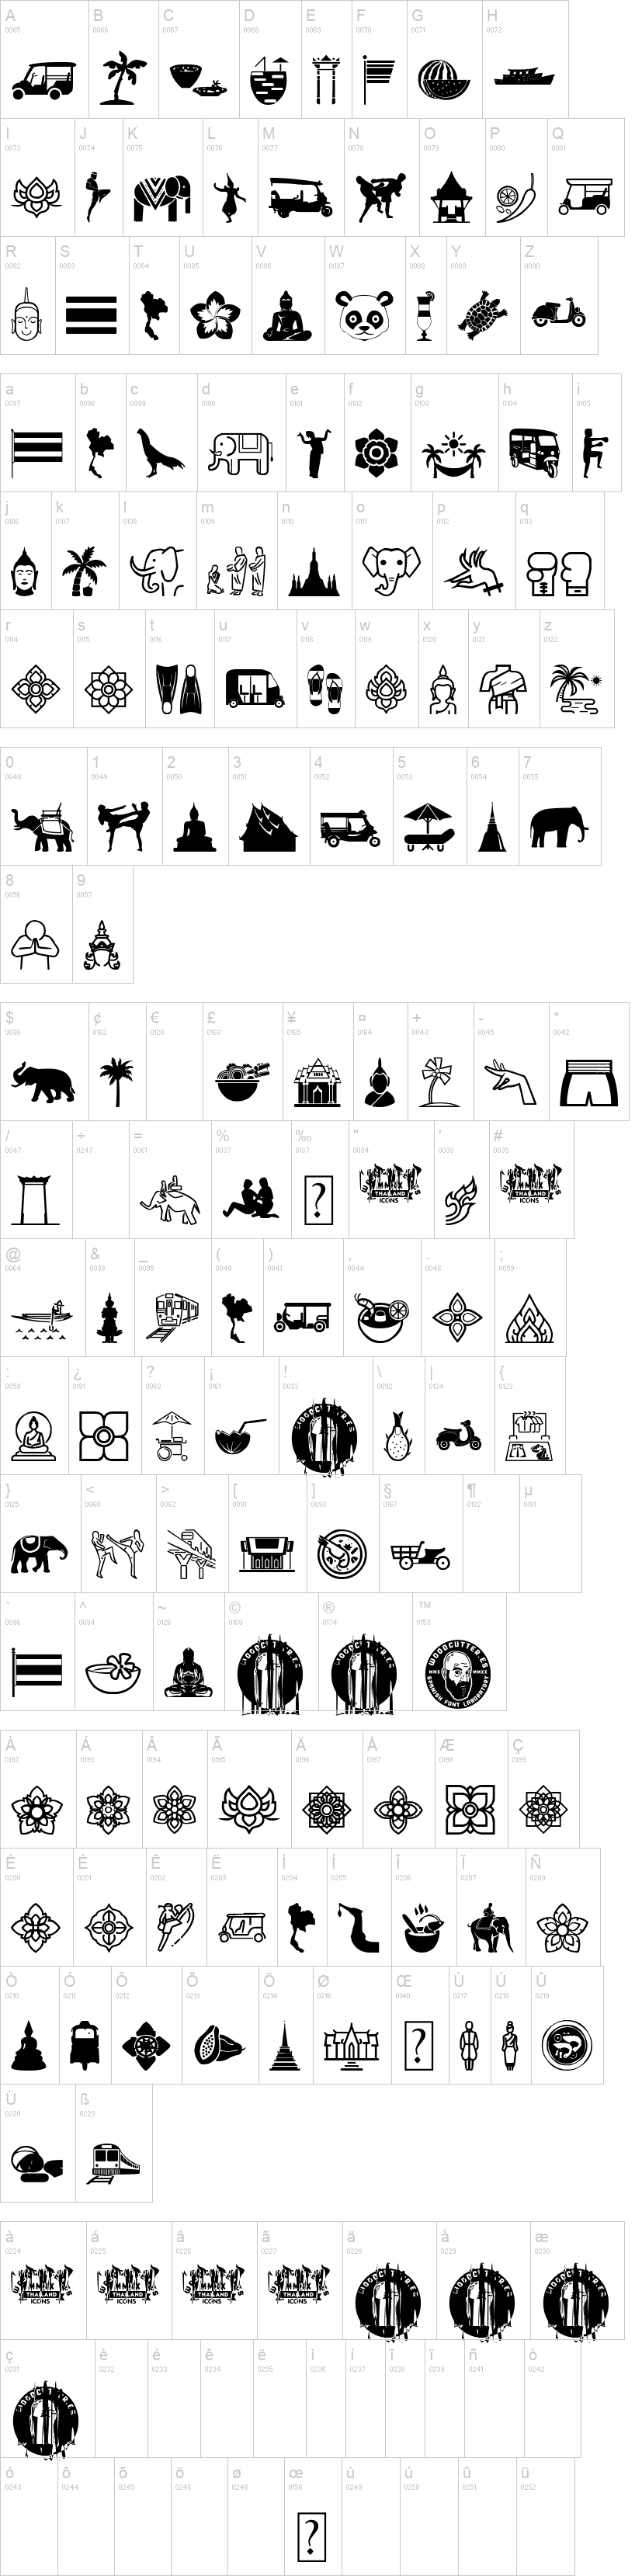 Thailand Icons